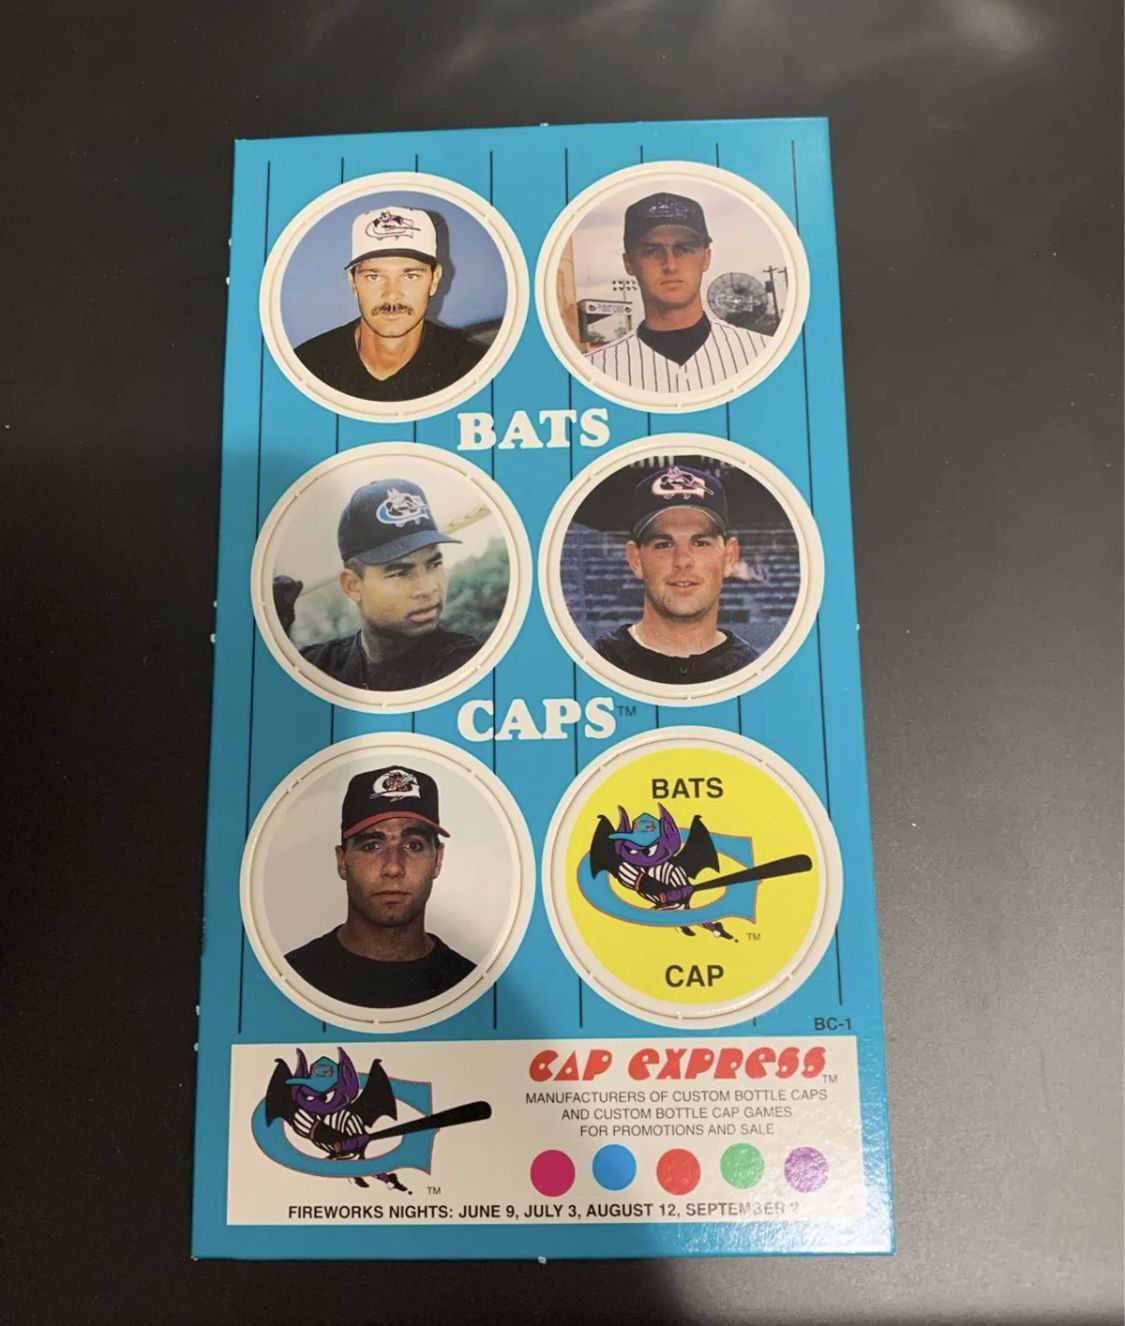 1995 Don Mattingly Bats Caps. Very Rare baseball card